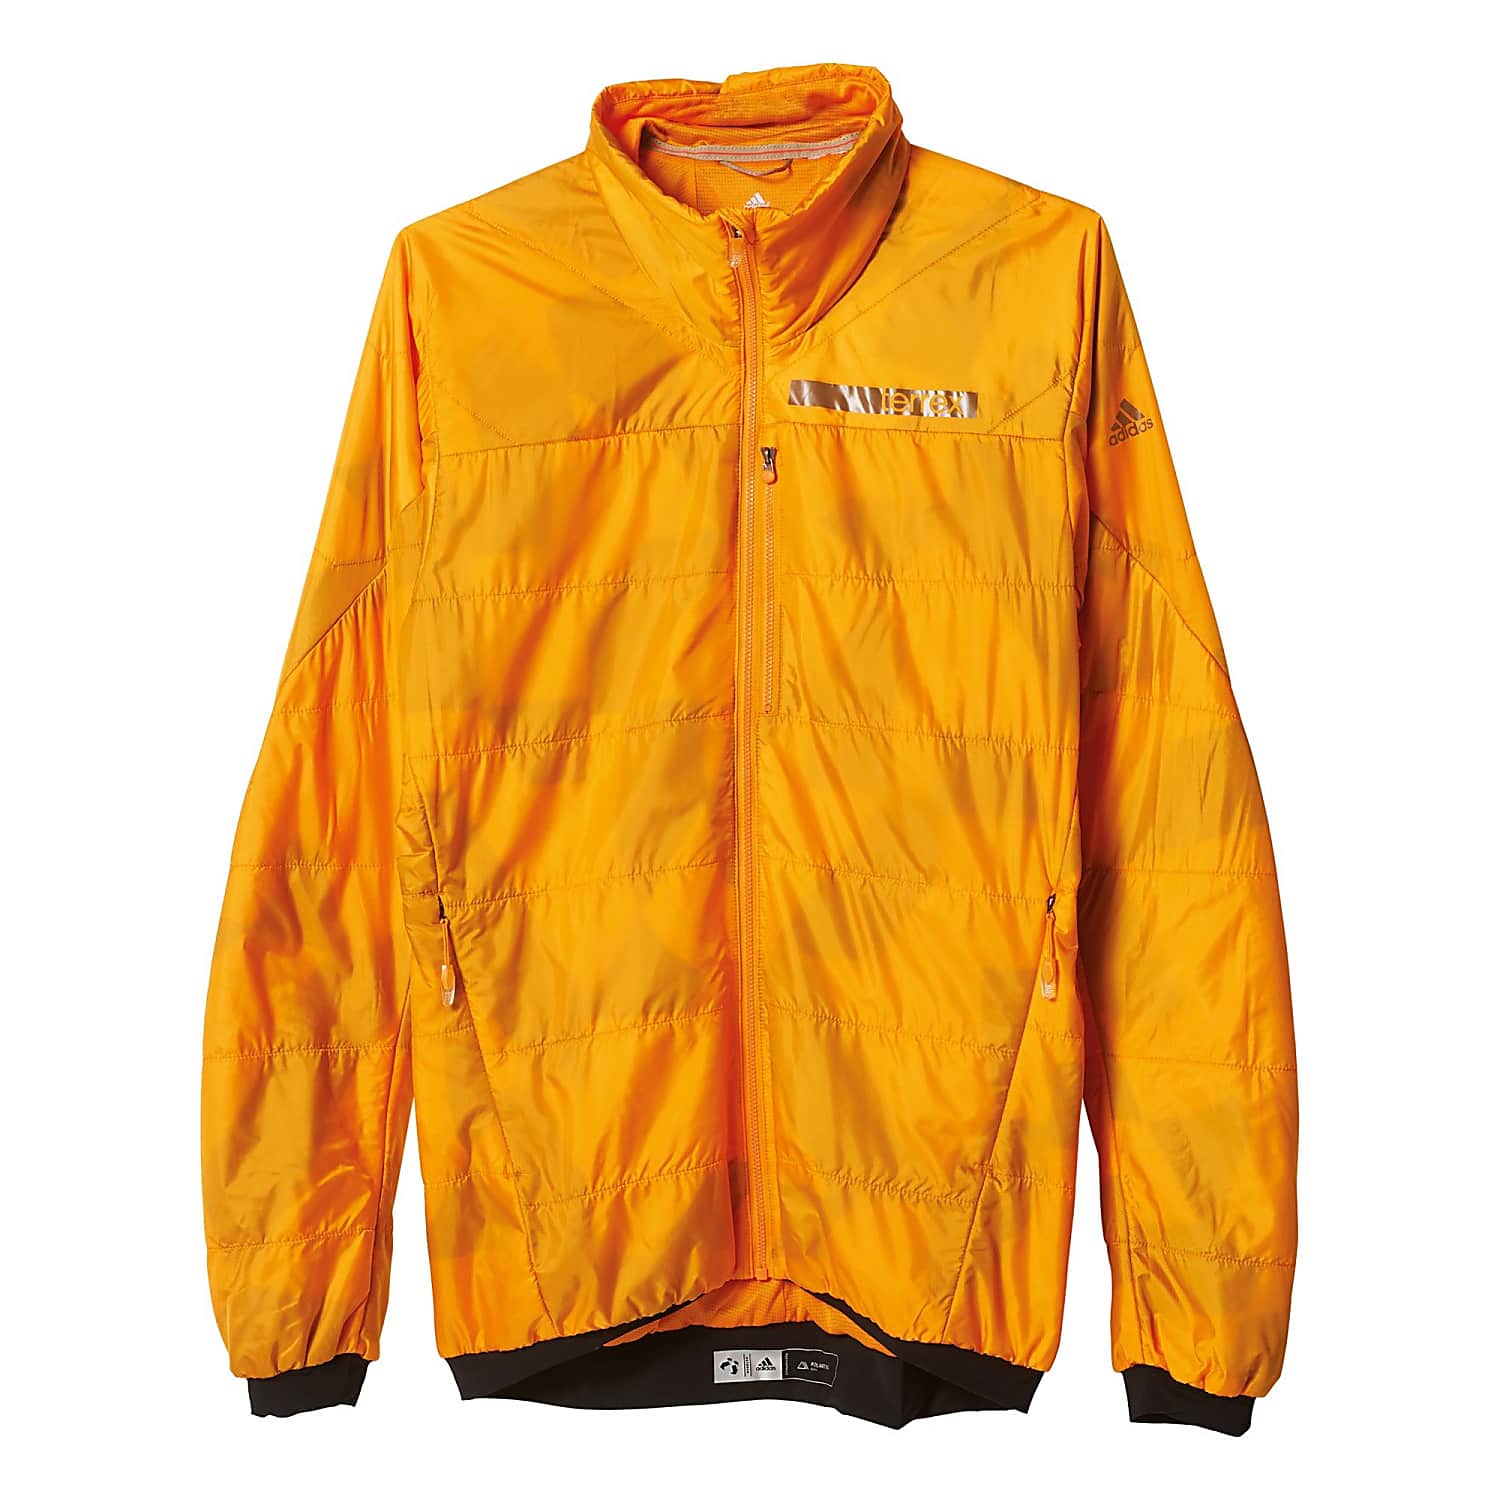 adidas terrex jacket orange